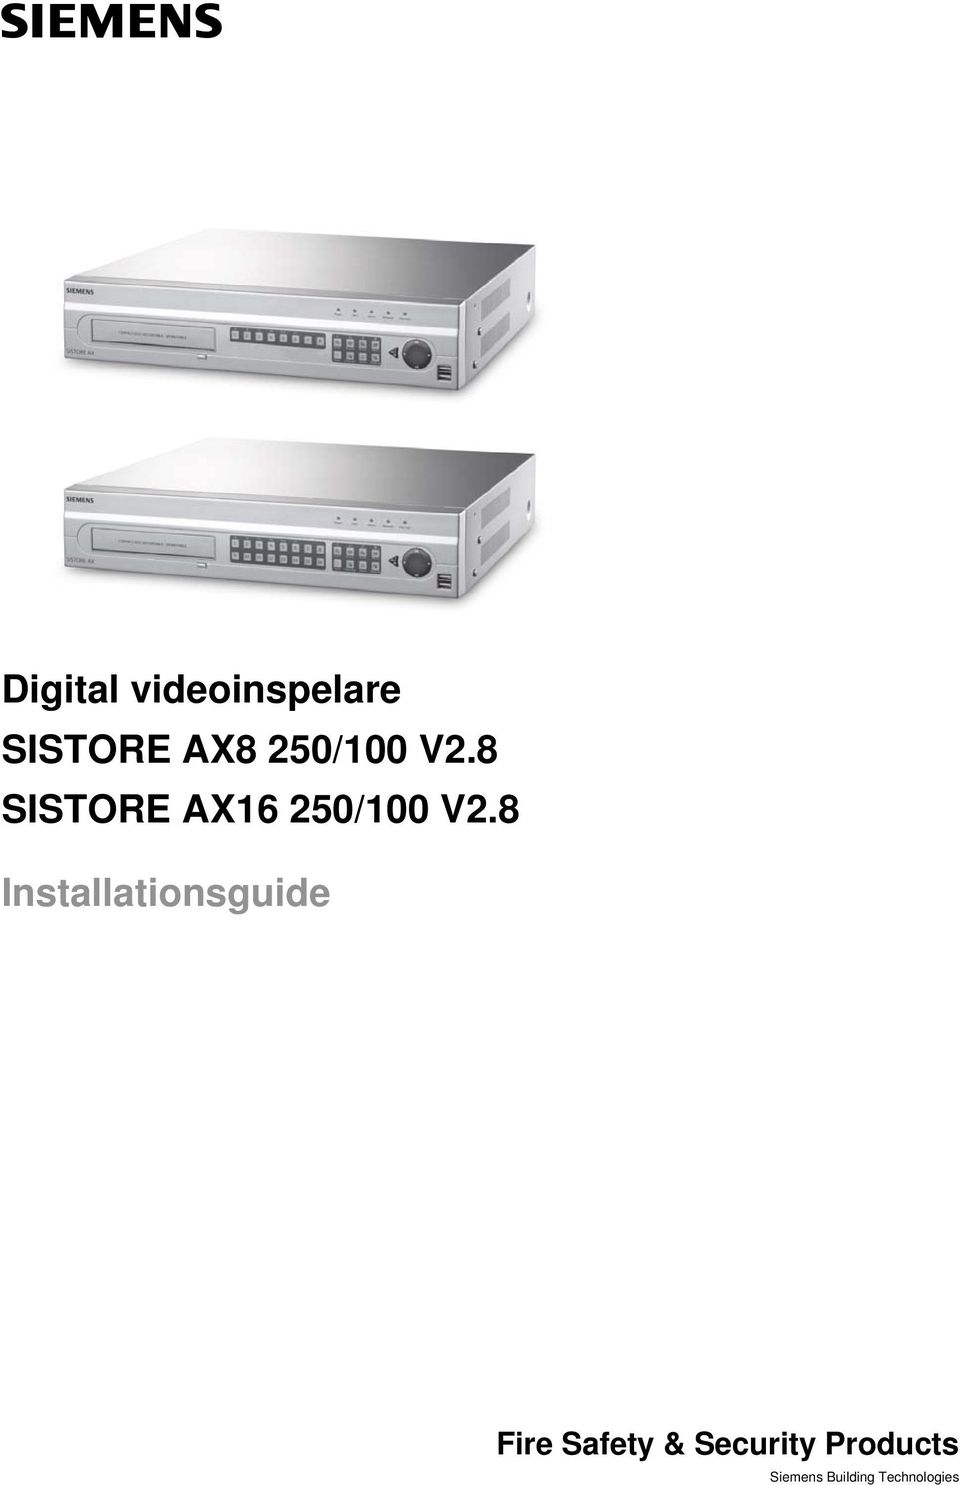 8 SISTORE AX16 250/100 V2.